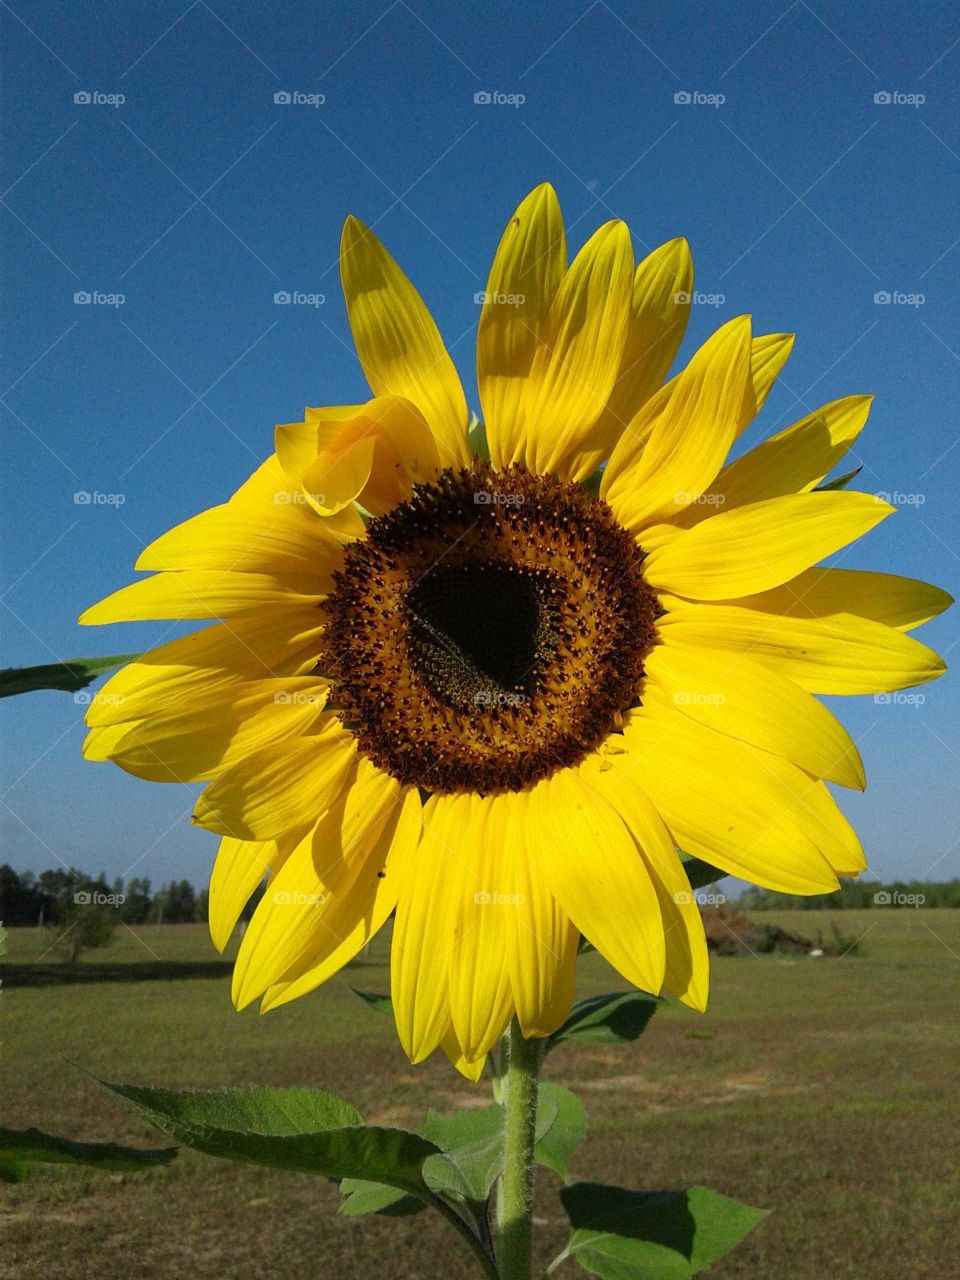 One in a million Super Sunflower!